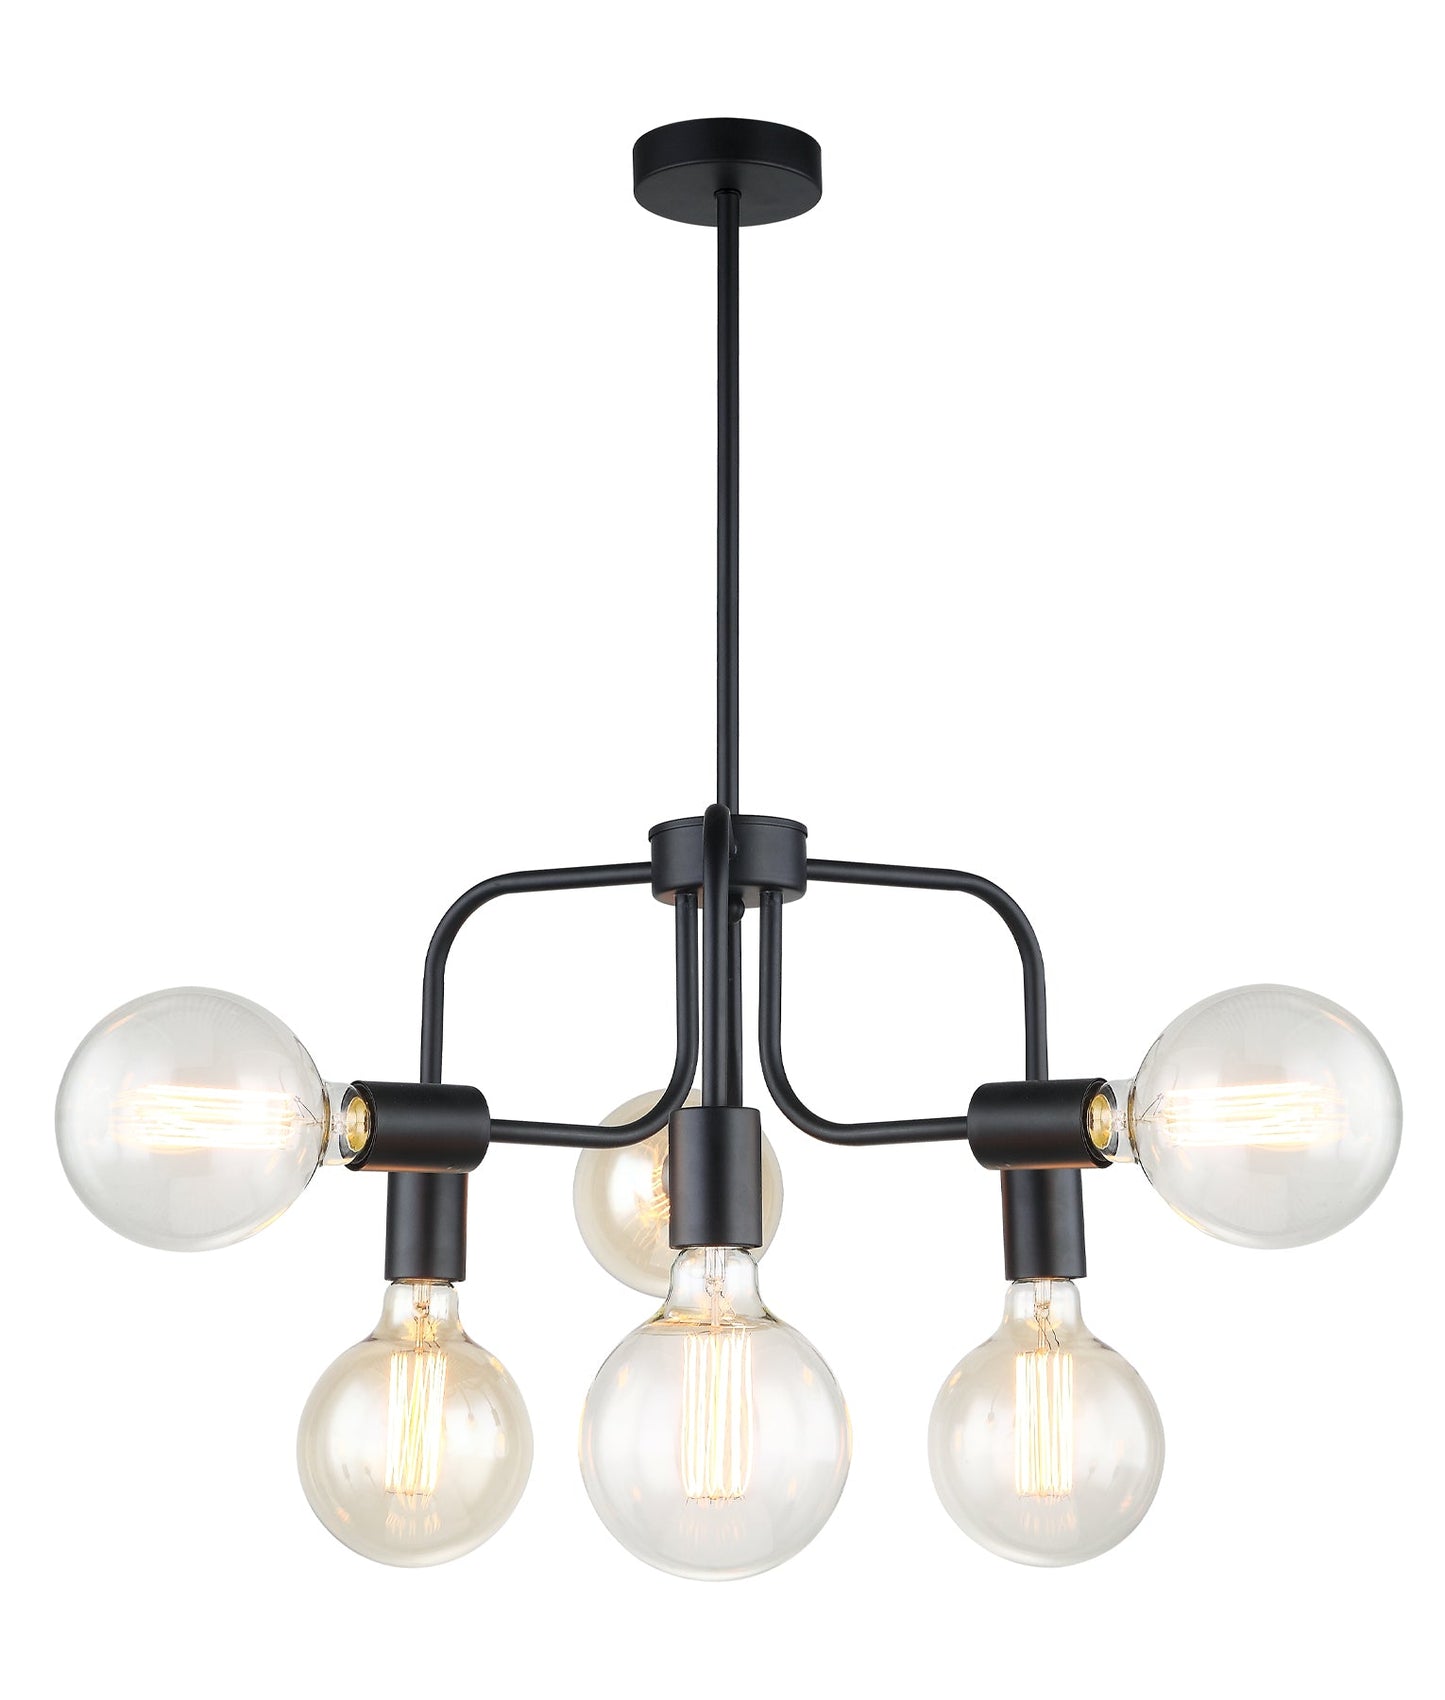 HEXA: Interior Modern Abstract Pendant Lights - 6 Lamps